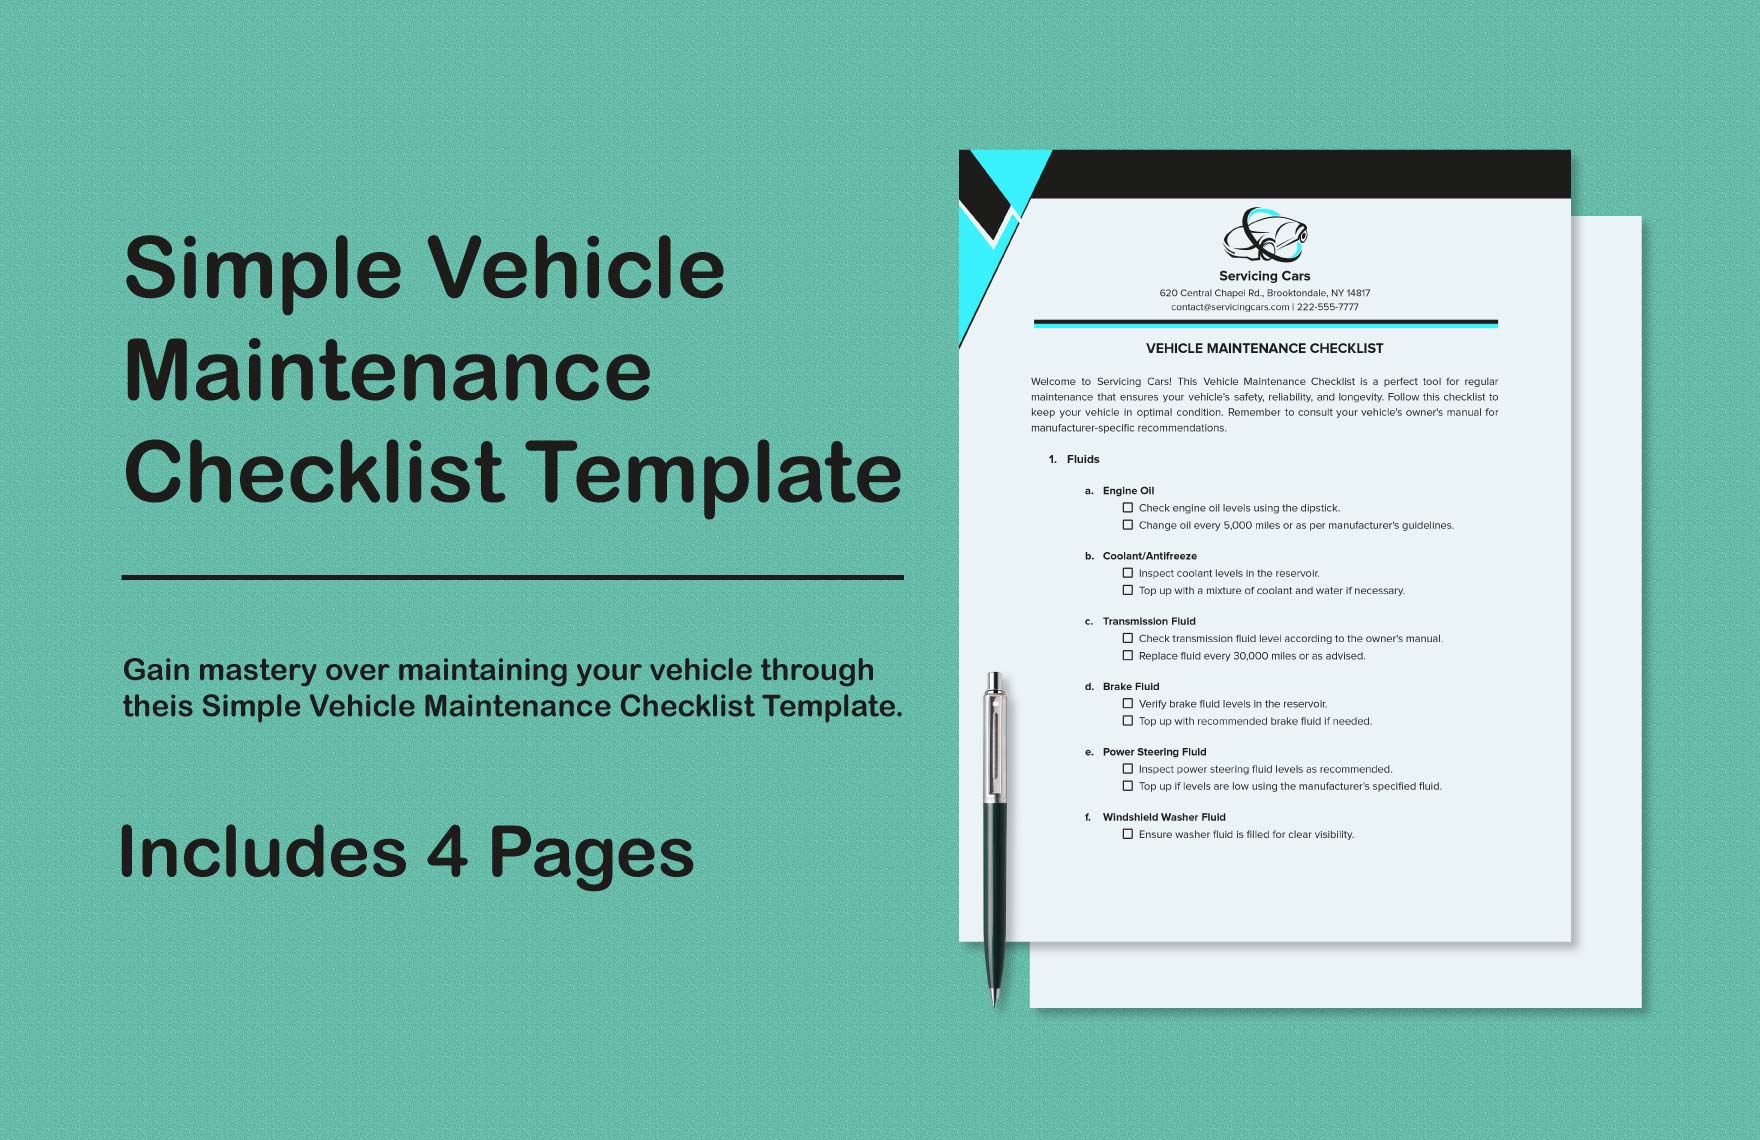 Simple Vehicle Maintenance Checklist Template